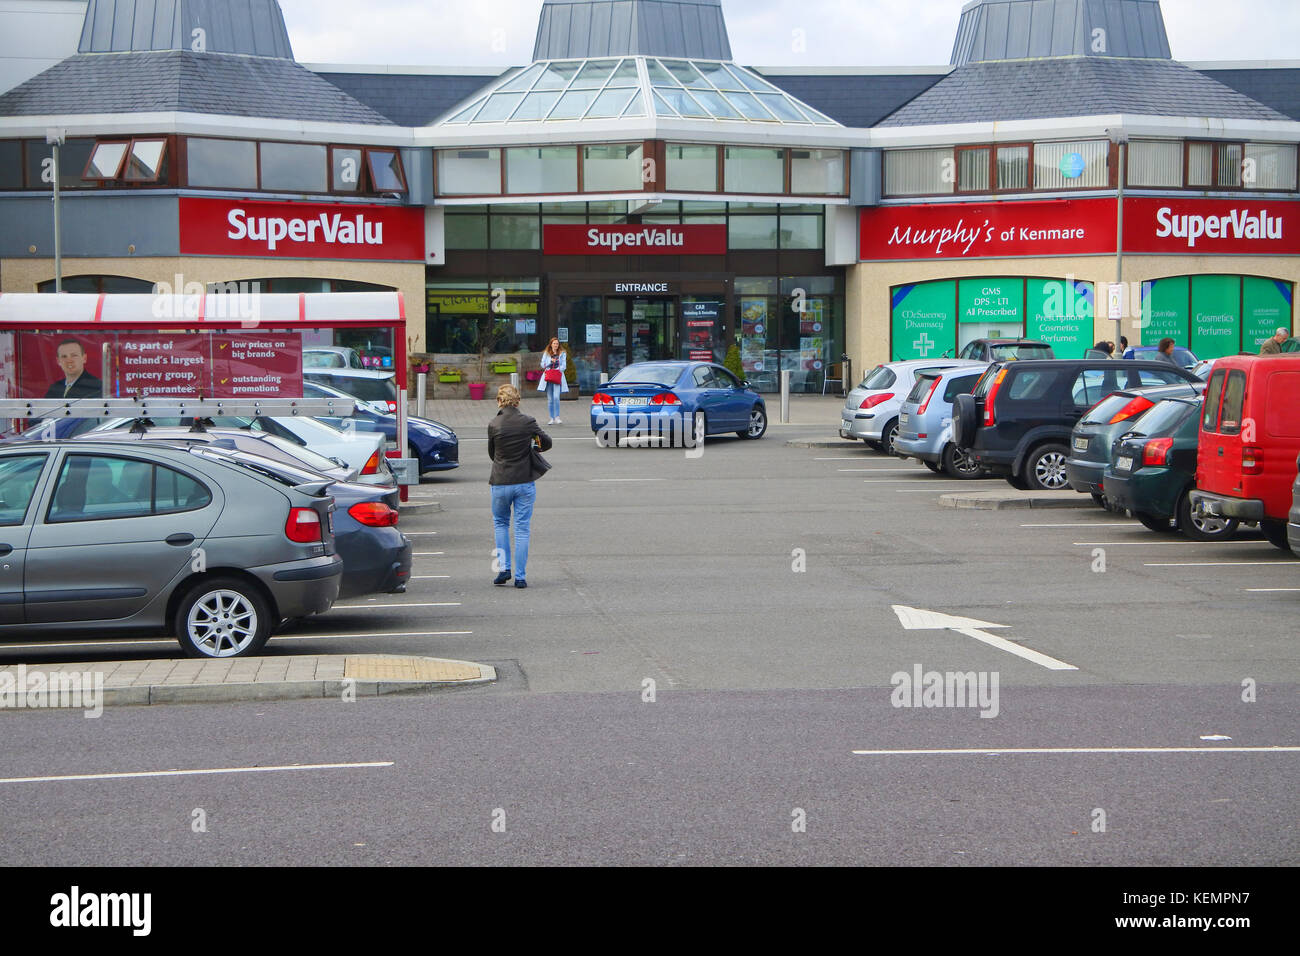 SuperValu Supermarket, Kenmare, County Kerry, Ireland - John Gollop Stock Photo